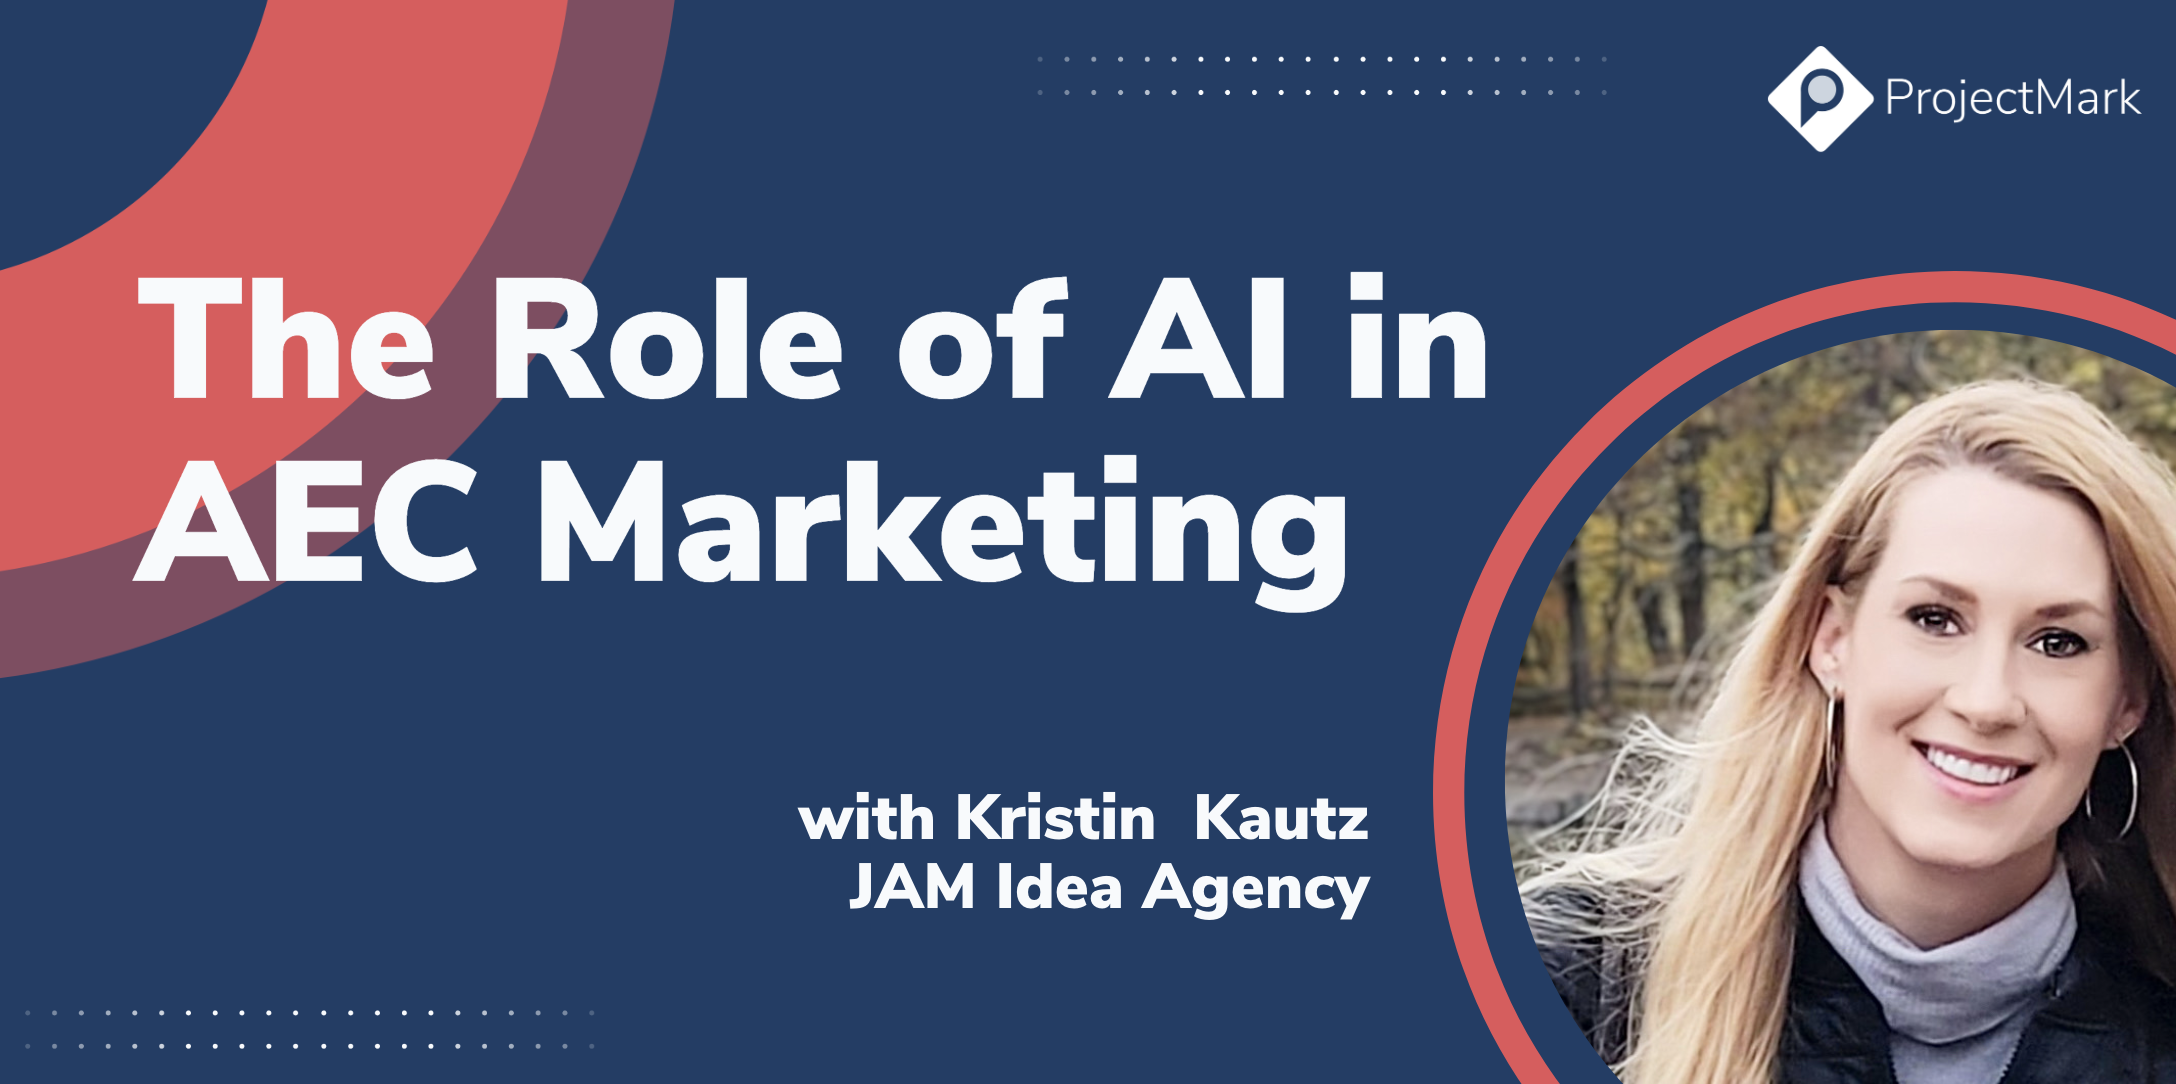 The Role of AI in AEC Marketing with Kristin Kautz, JAM Idea Agency